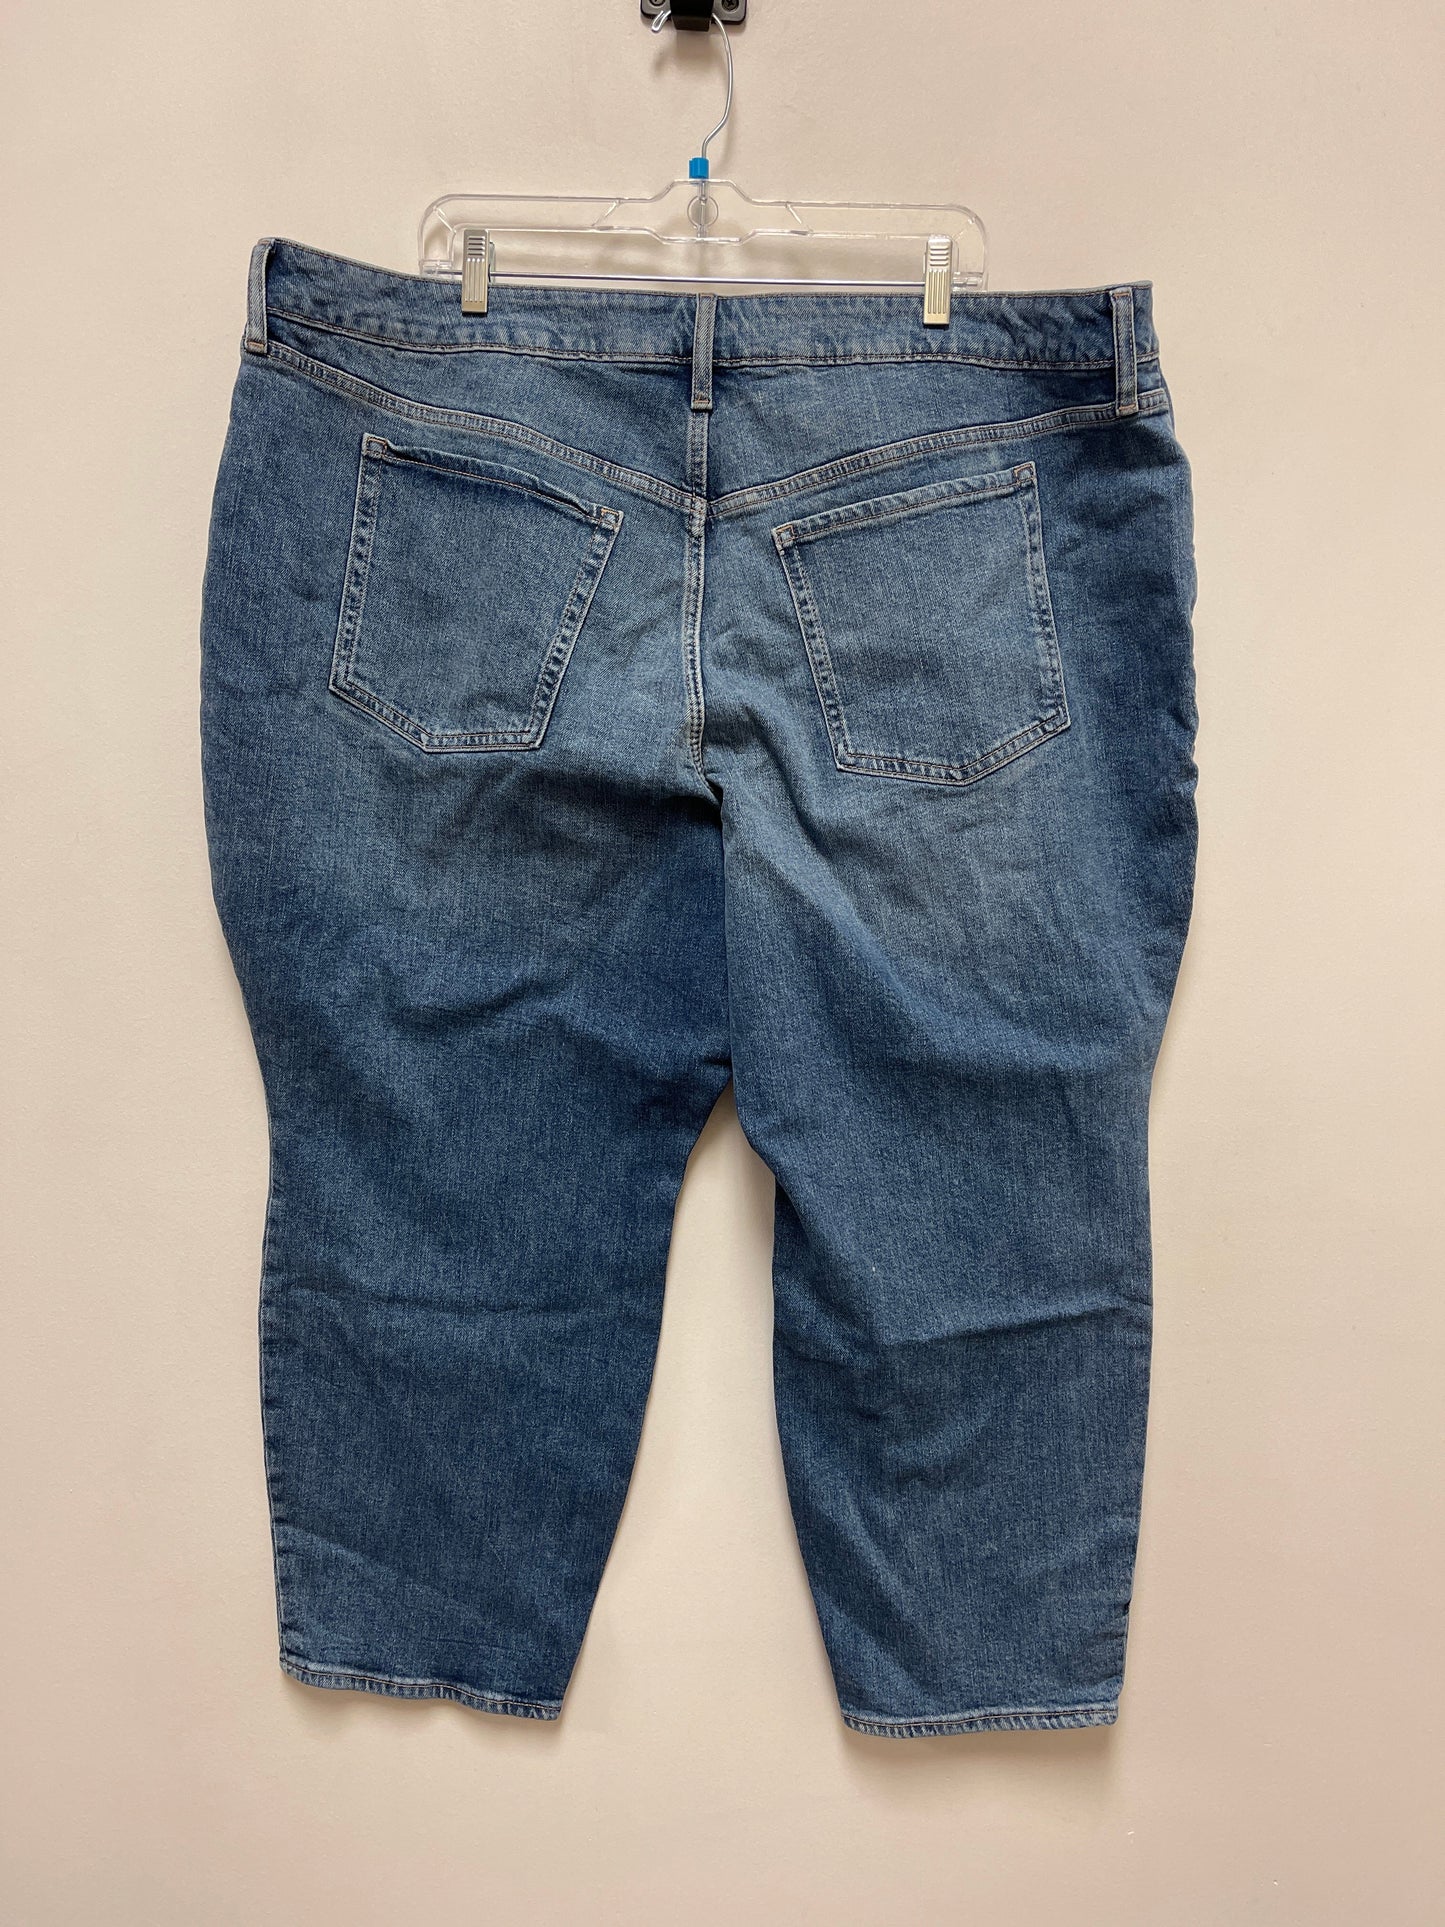 Blue Denim Jeans Straight Old Navy, Size 4x